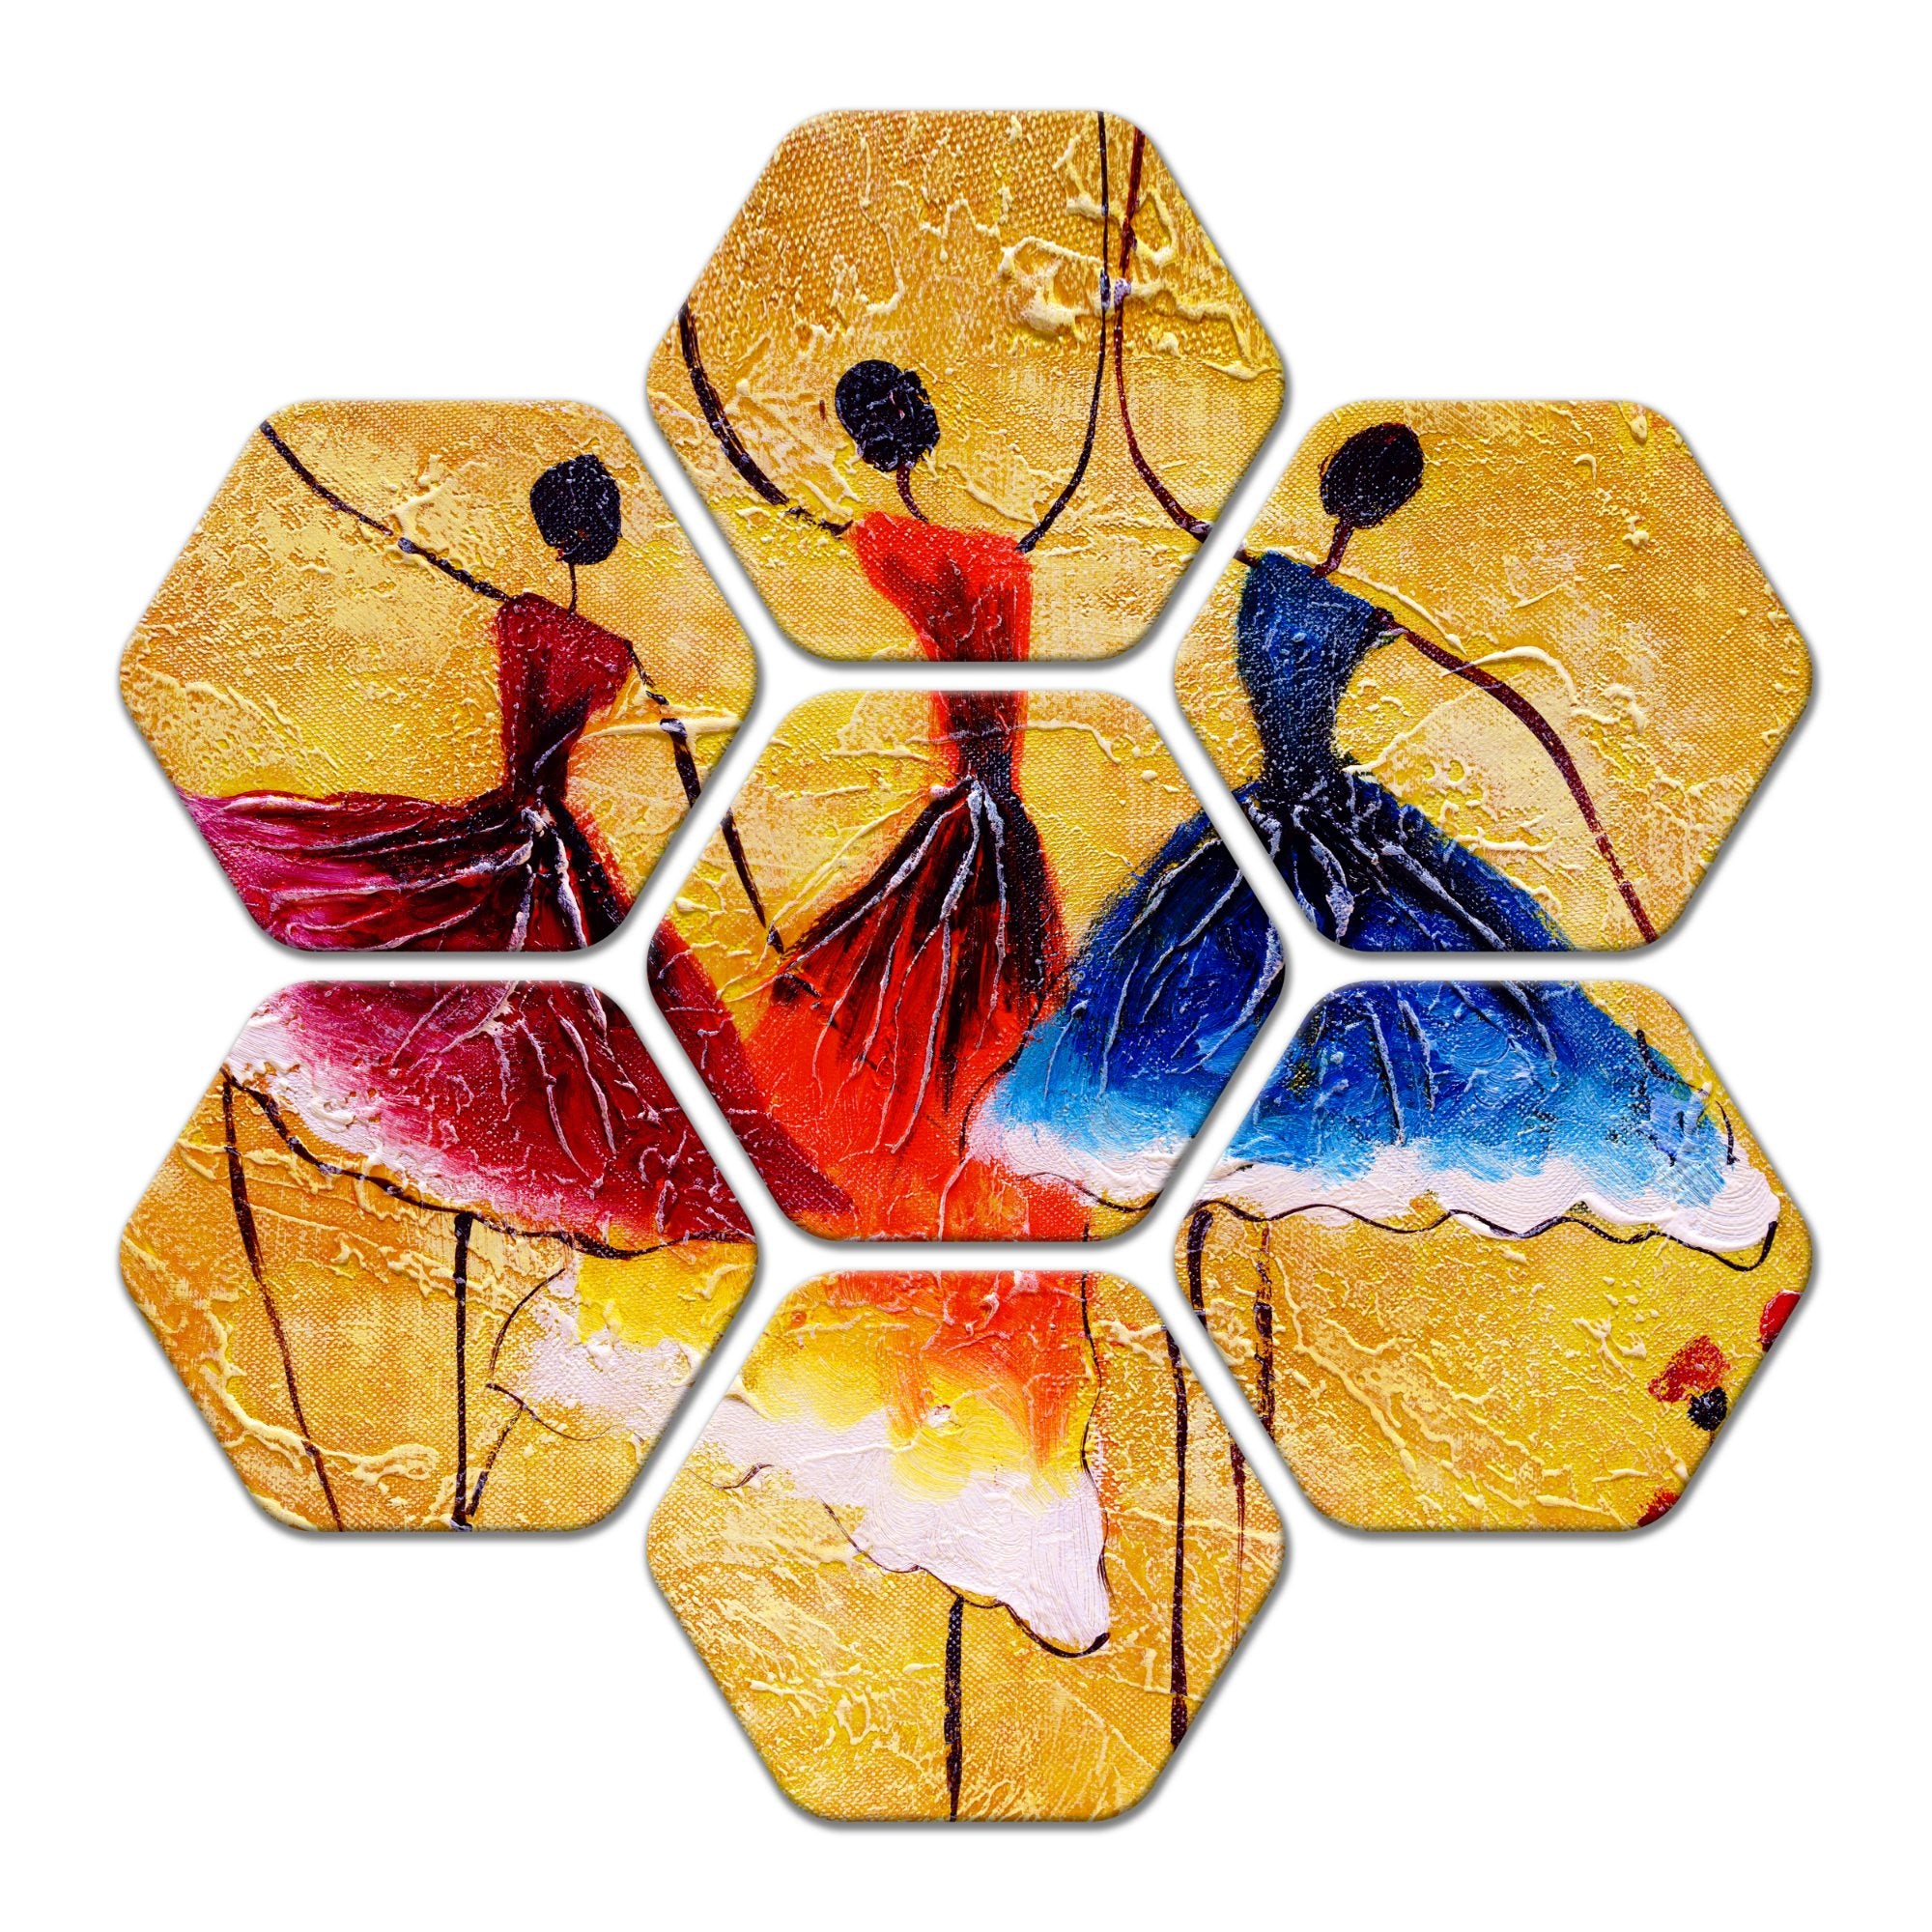 Three Women Dancing Hexagon Painting of 7 Pieces